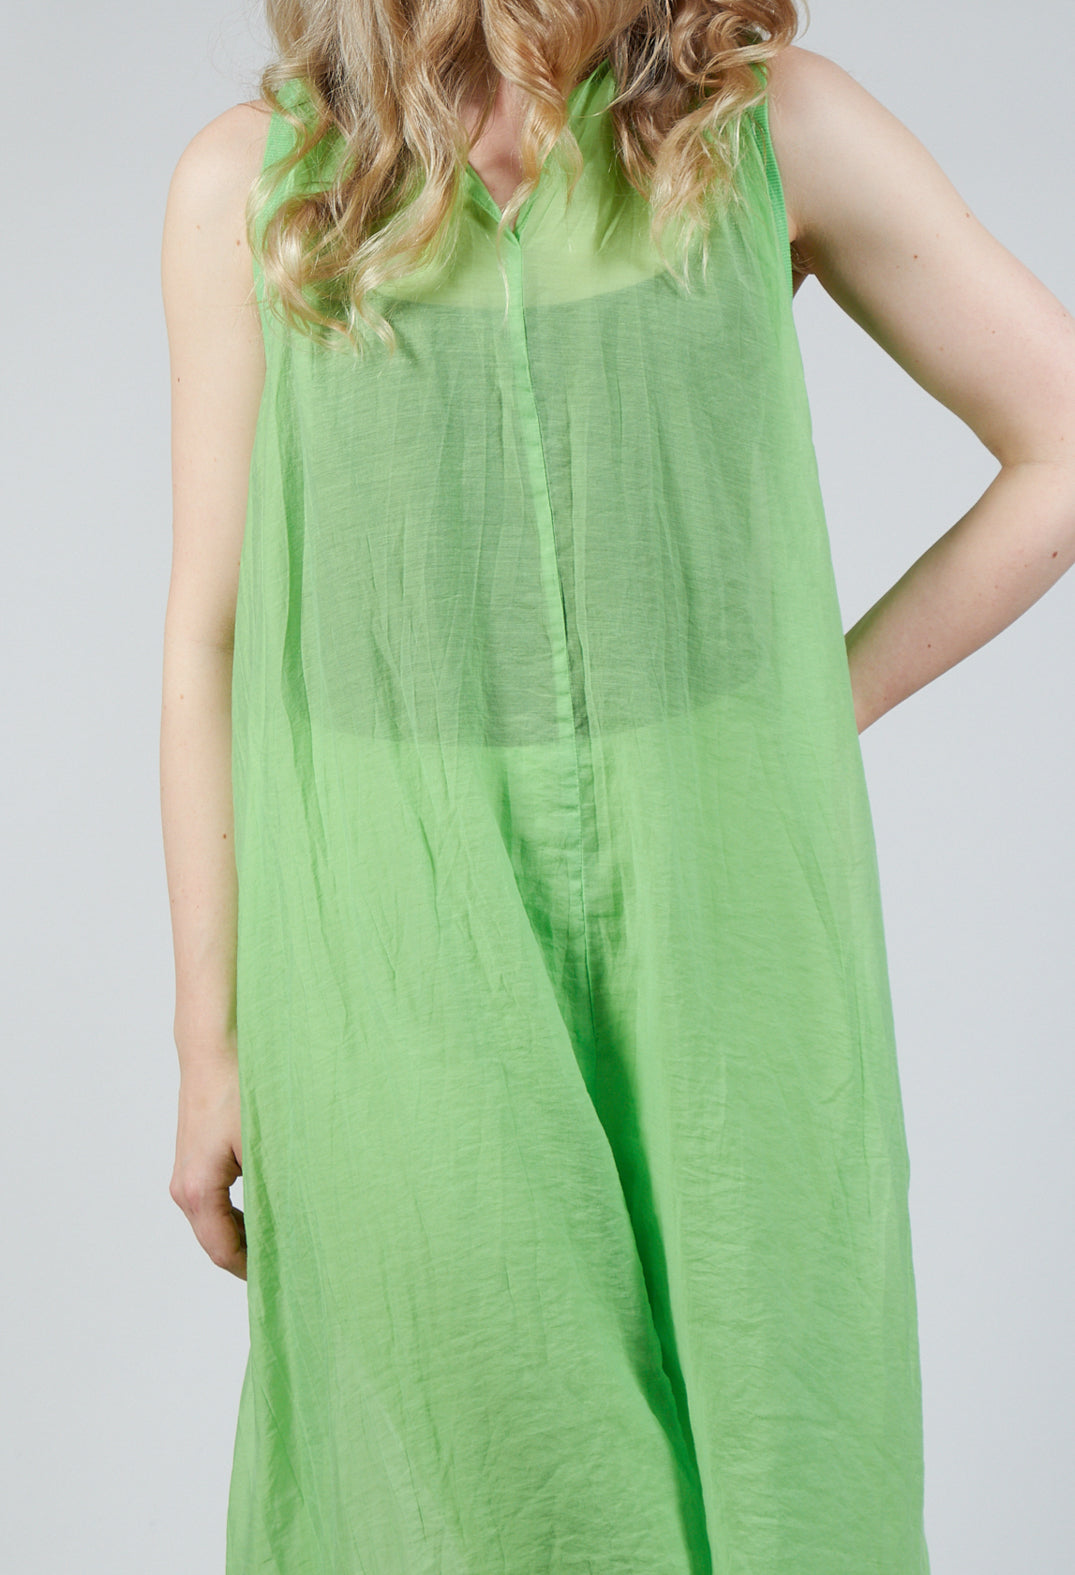 Lightweight Sleeveless Dress in Lime